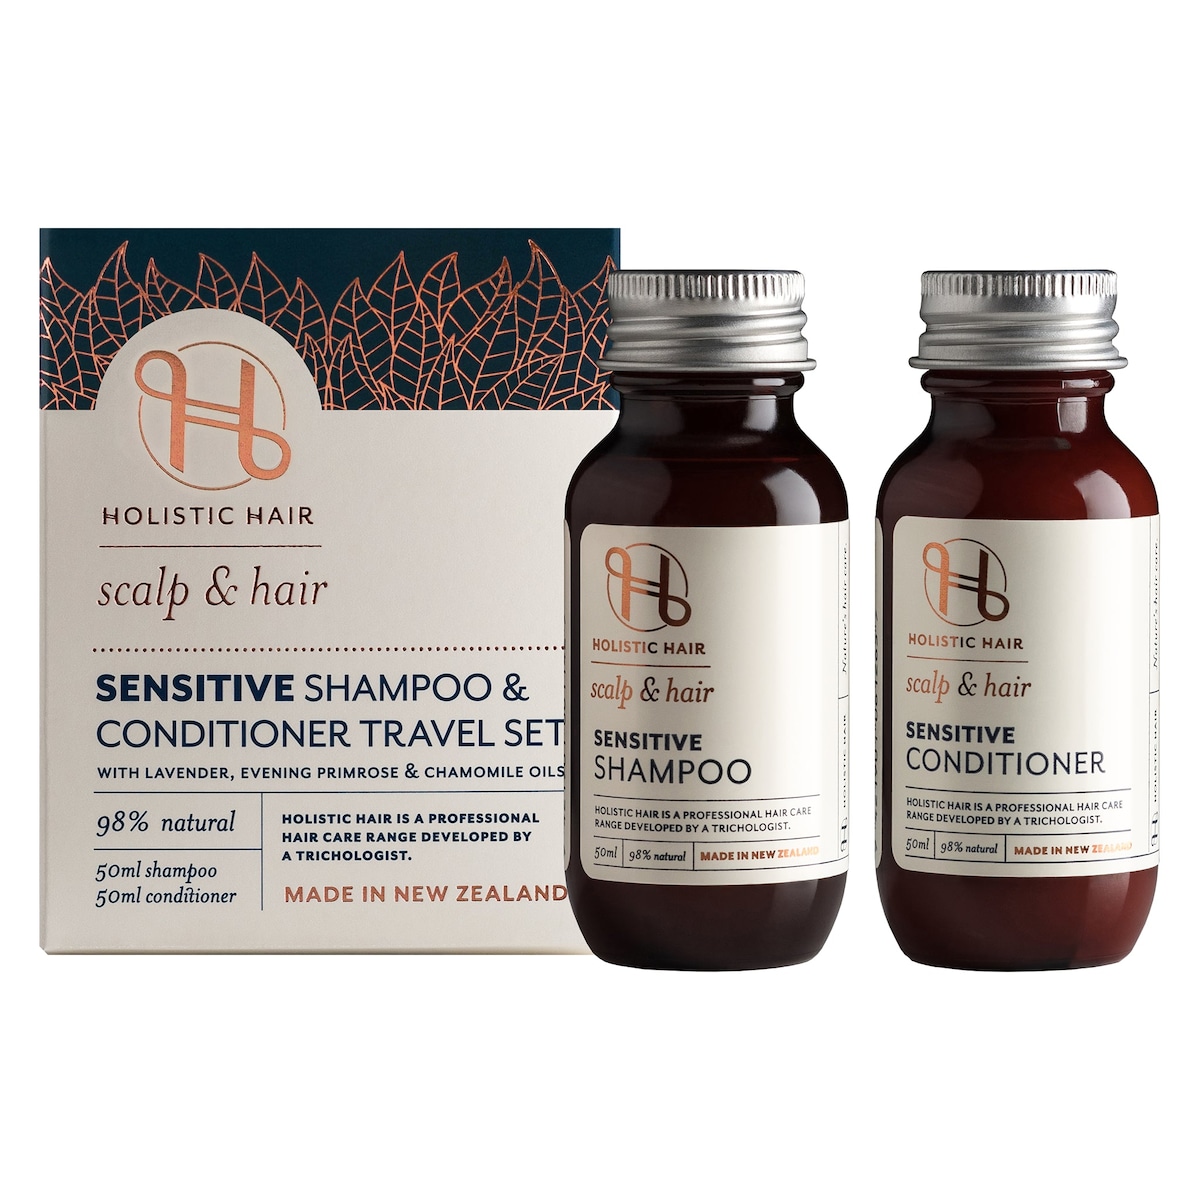 Holistic Hair Sensitive Shampoo & Conditioner Travel Set -2 x 50ml